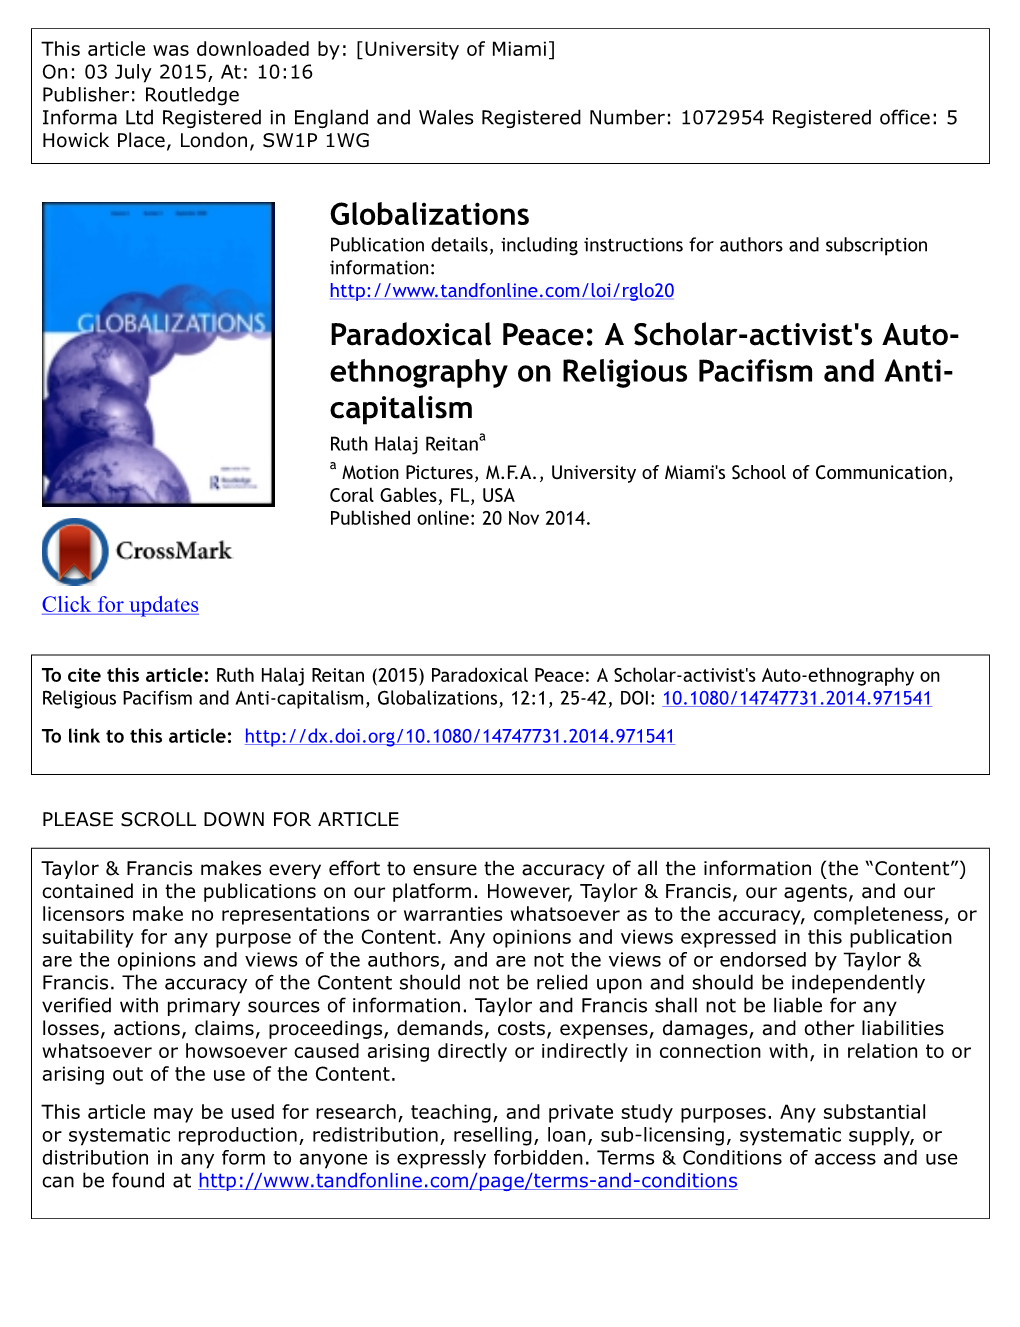 Paradoxical Peace: a Scholar-Activist's Auto-Ethnography